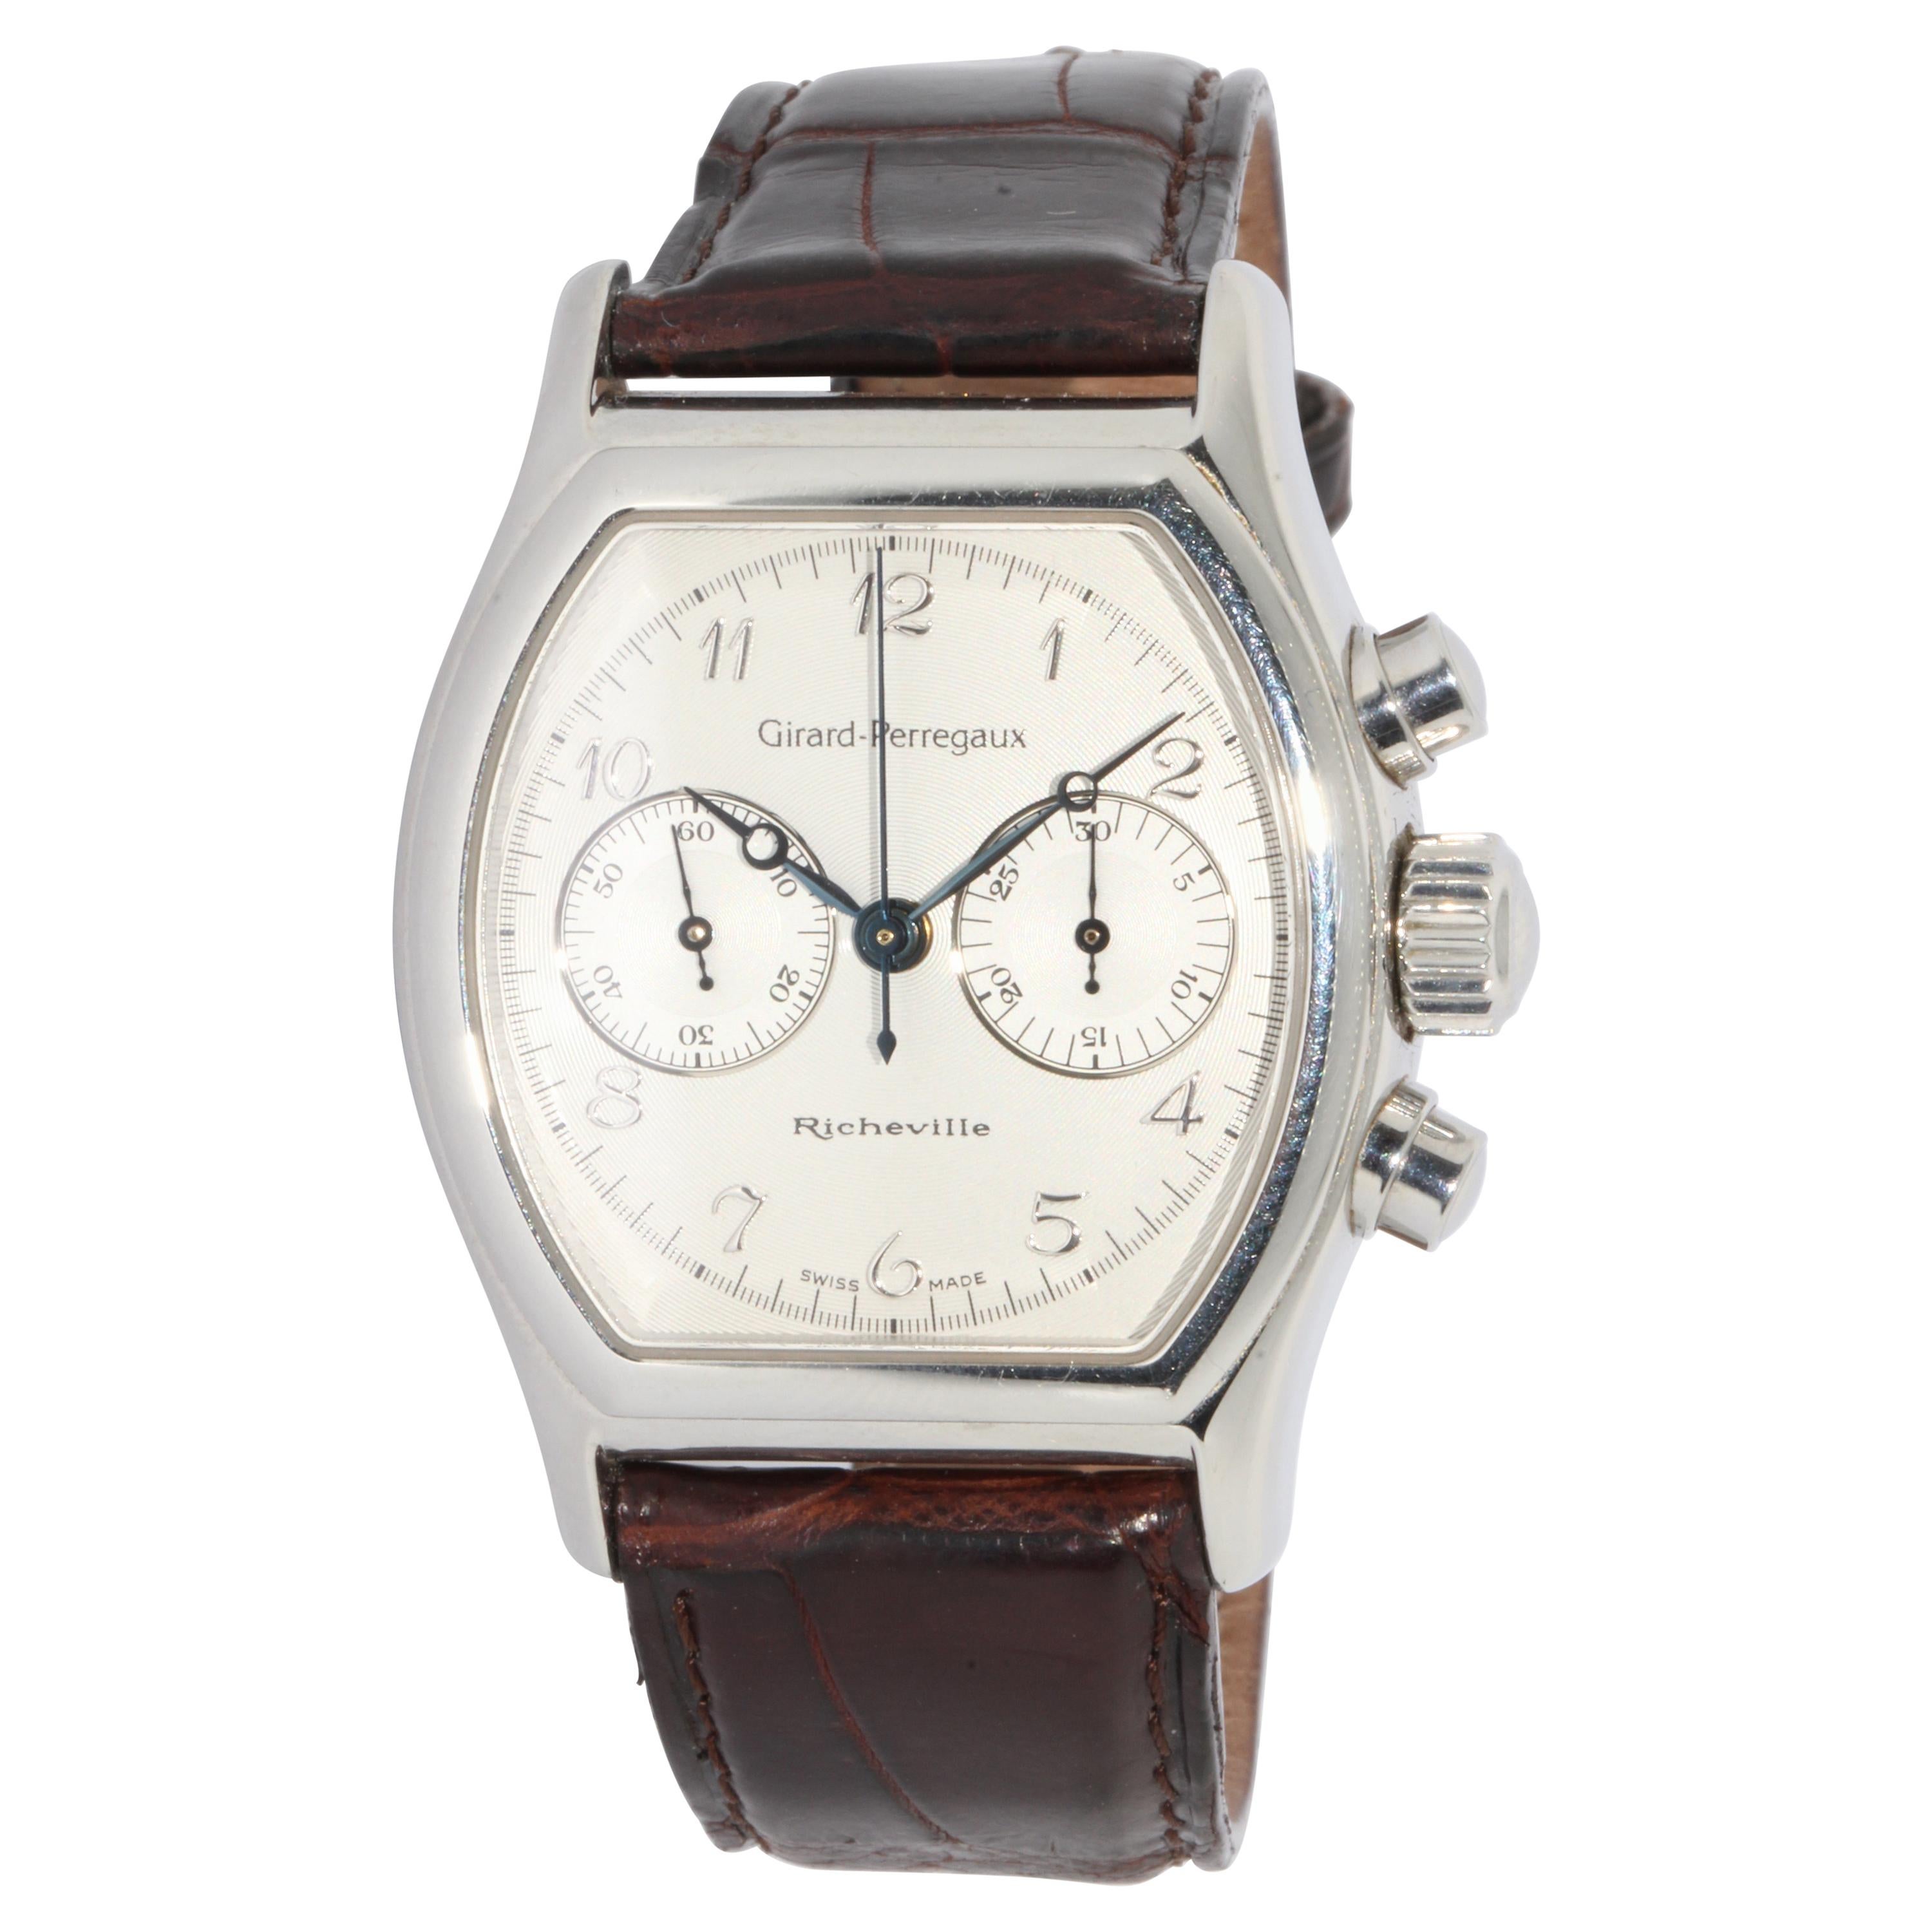 Girard Perregaux Richeville Chronograph Ref. 2710 Wristwatch